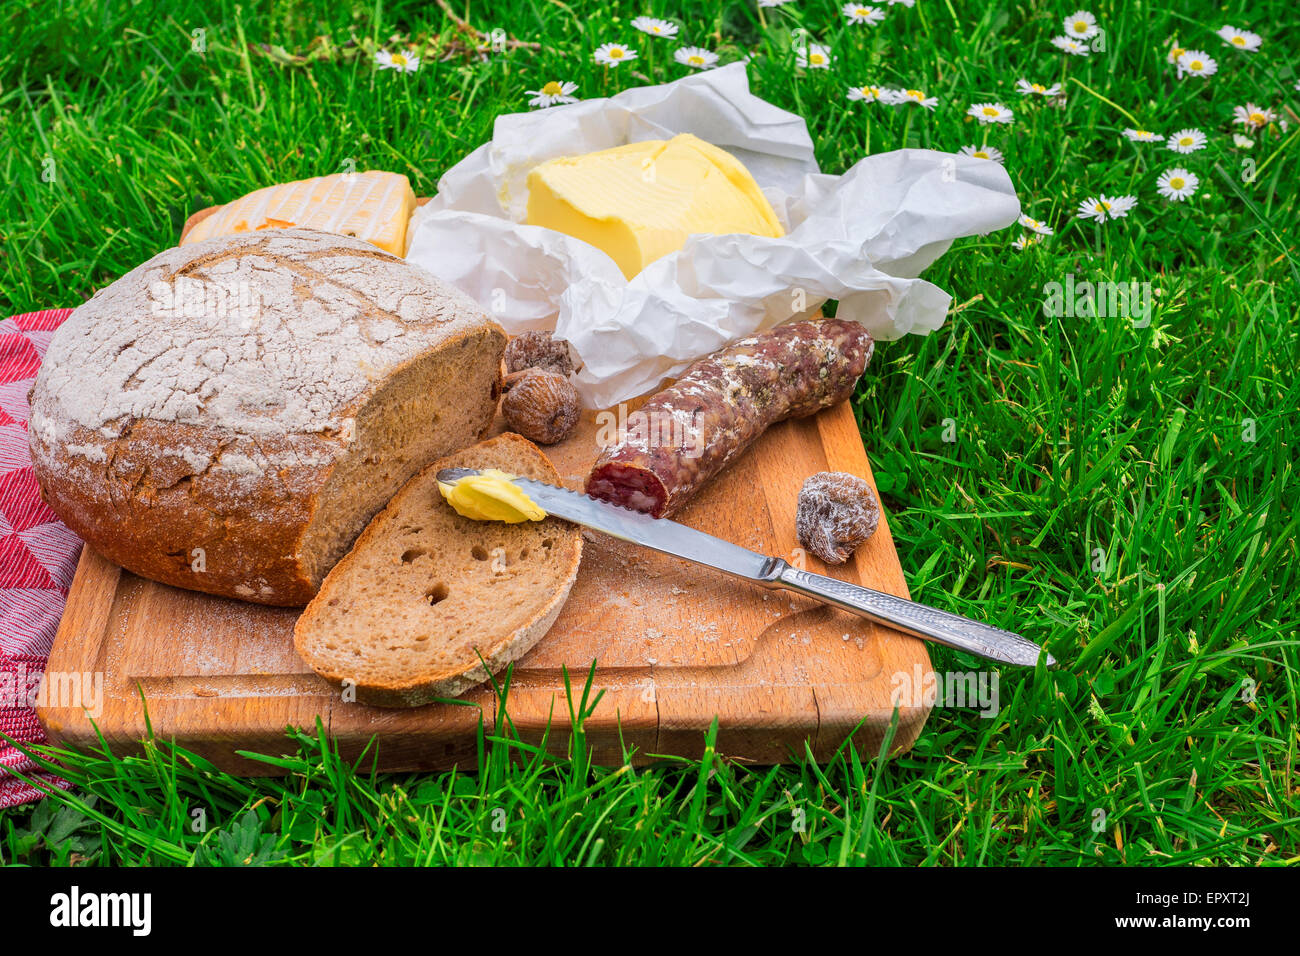 Picknick-Platte mit Brot, Käse und Wurst Stockfoto